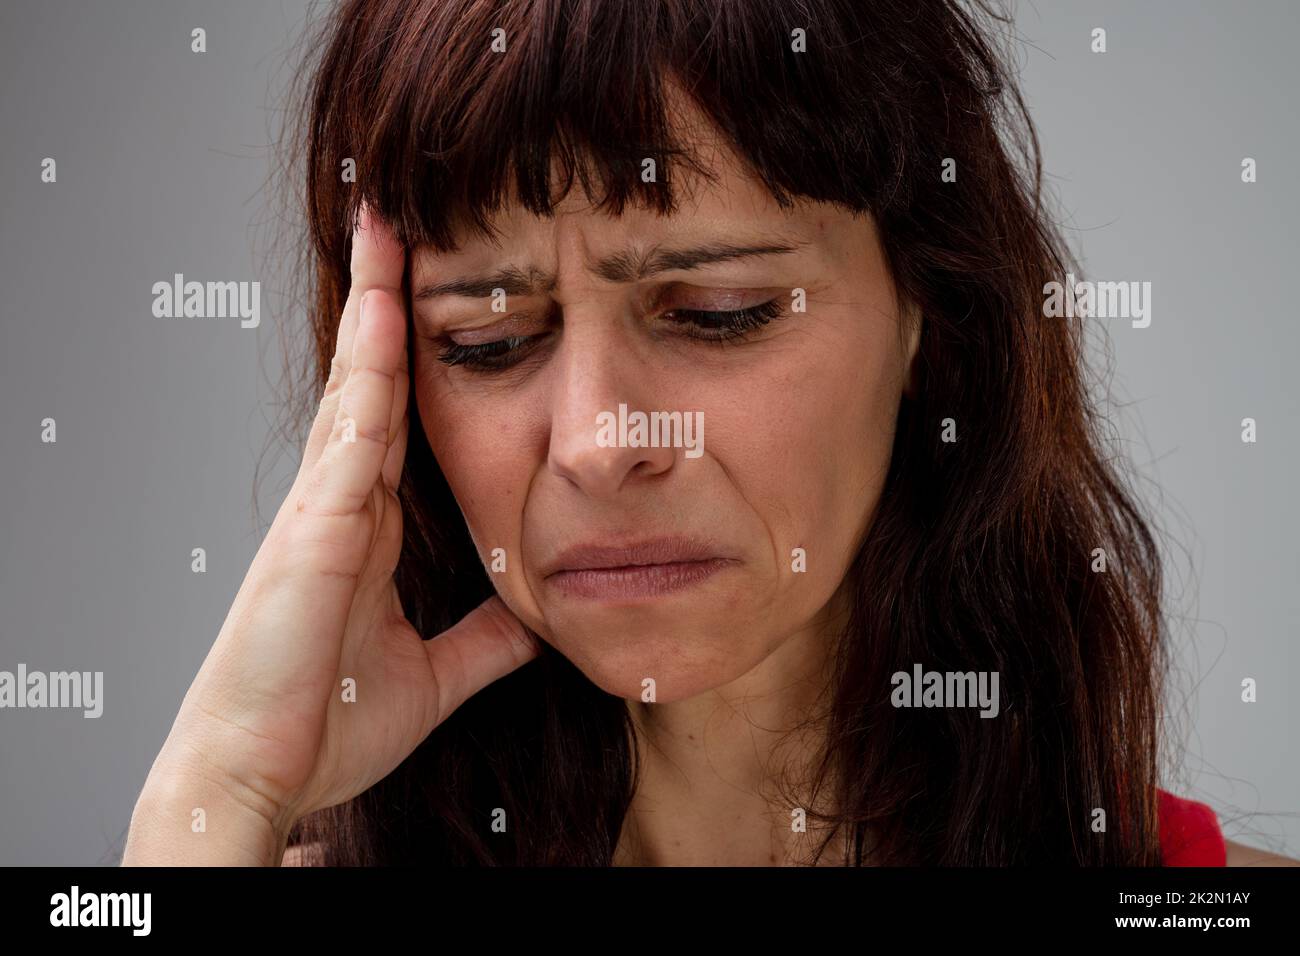 Unwell sick woman with a migraine headache Stock Photo